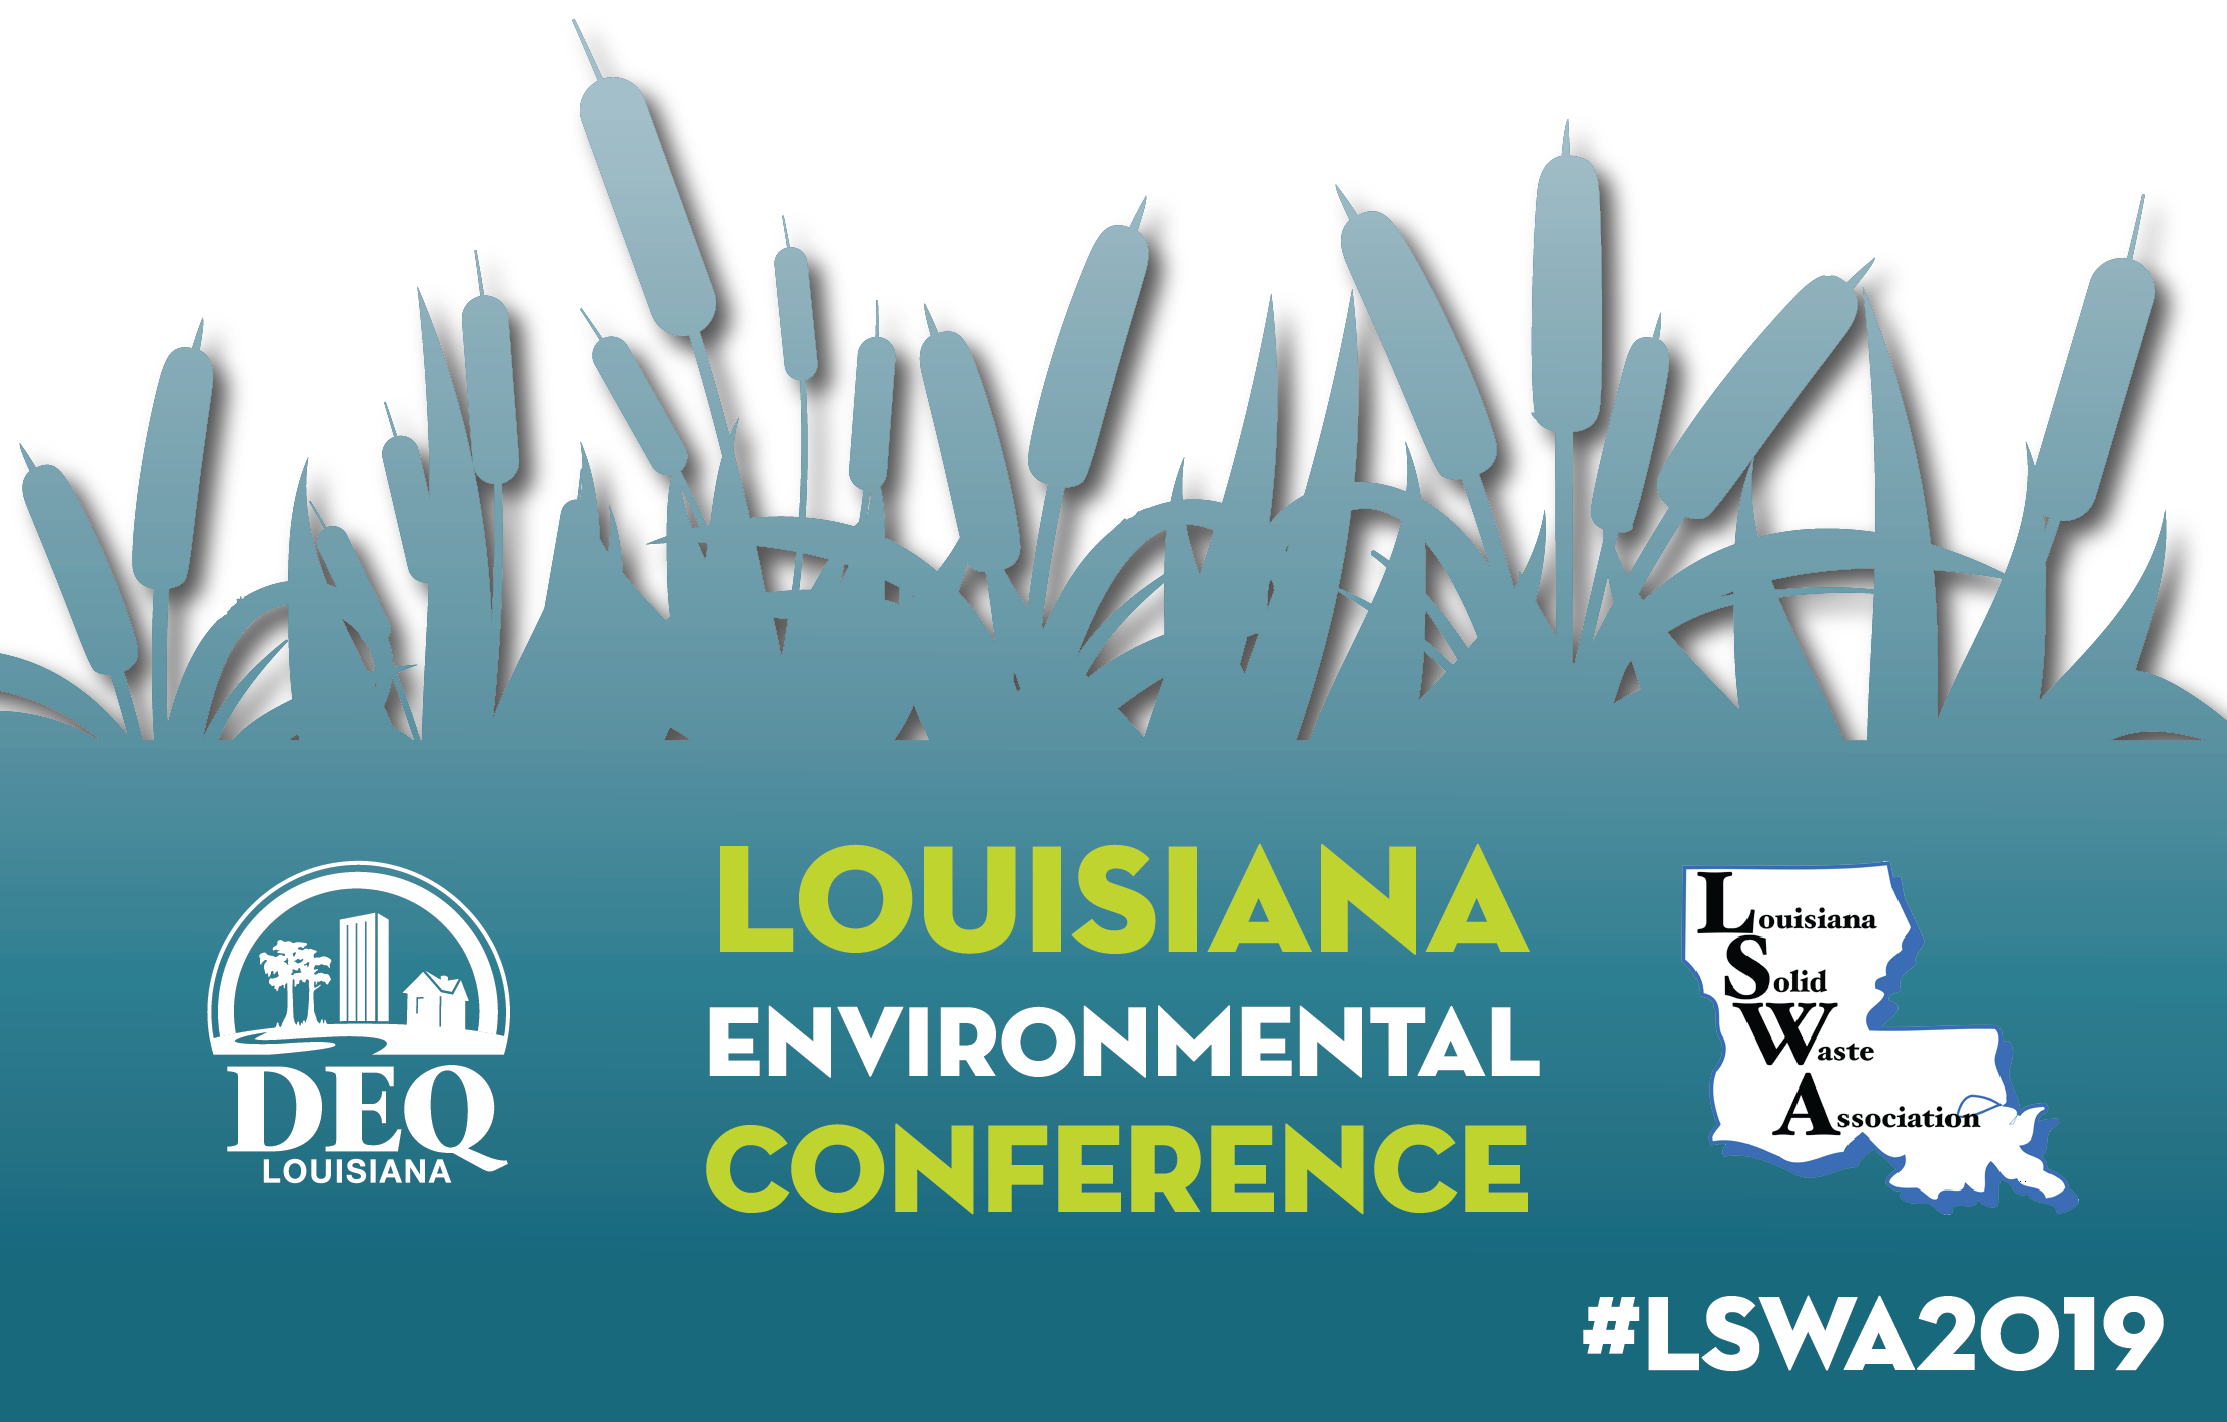 Louisiana Environmental Conference Filter Image